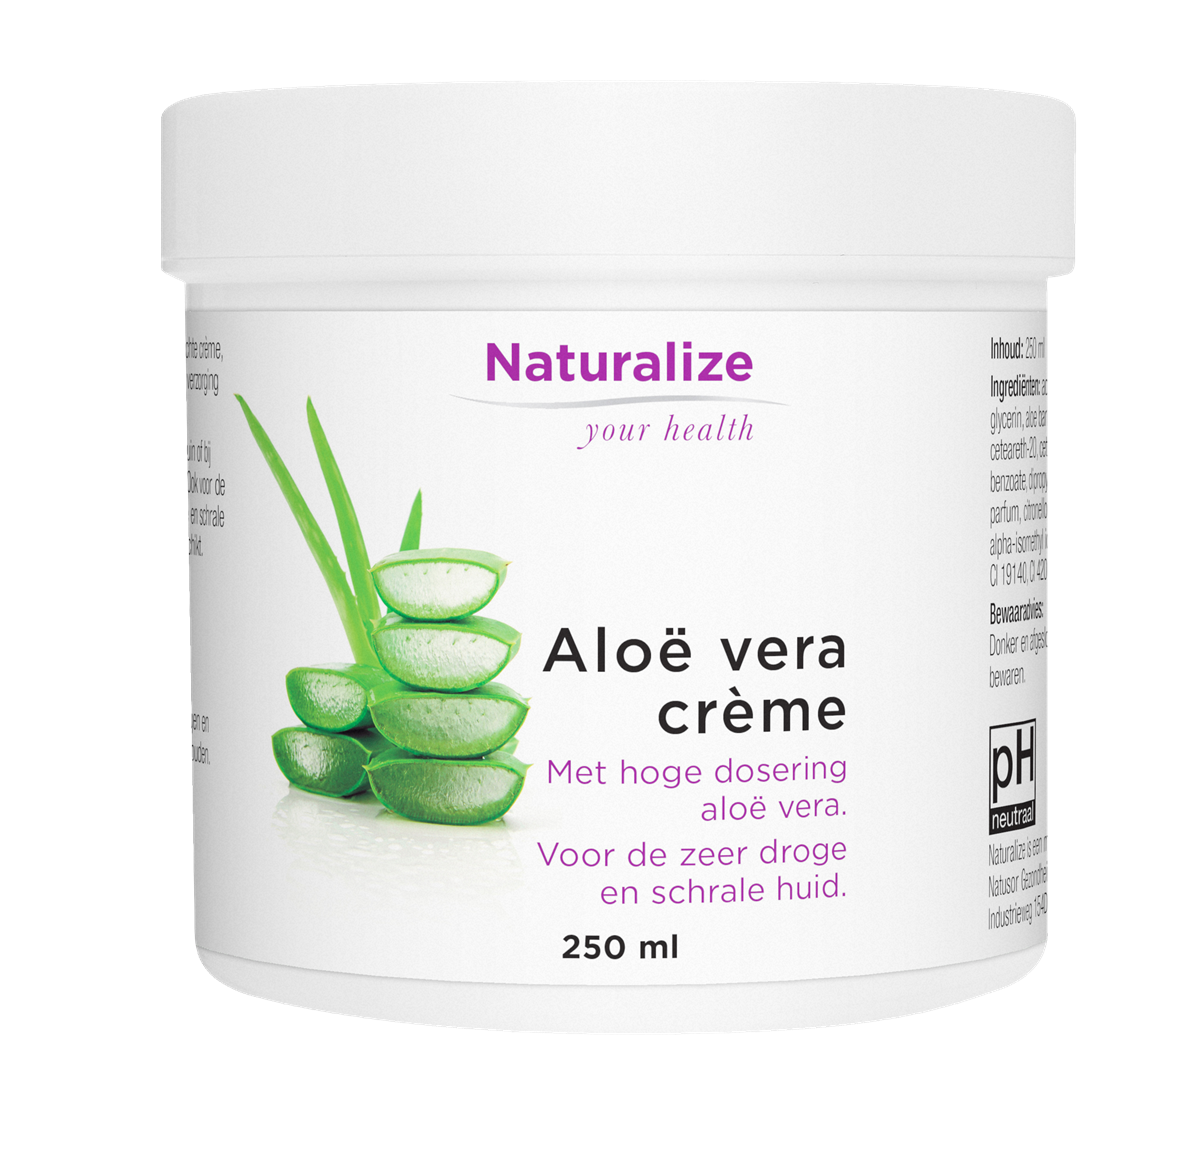 ik heb honger Parel verwarring Buy Naturalize Aloe vera-cream? - GoldenNaturals.com